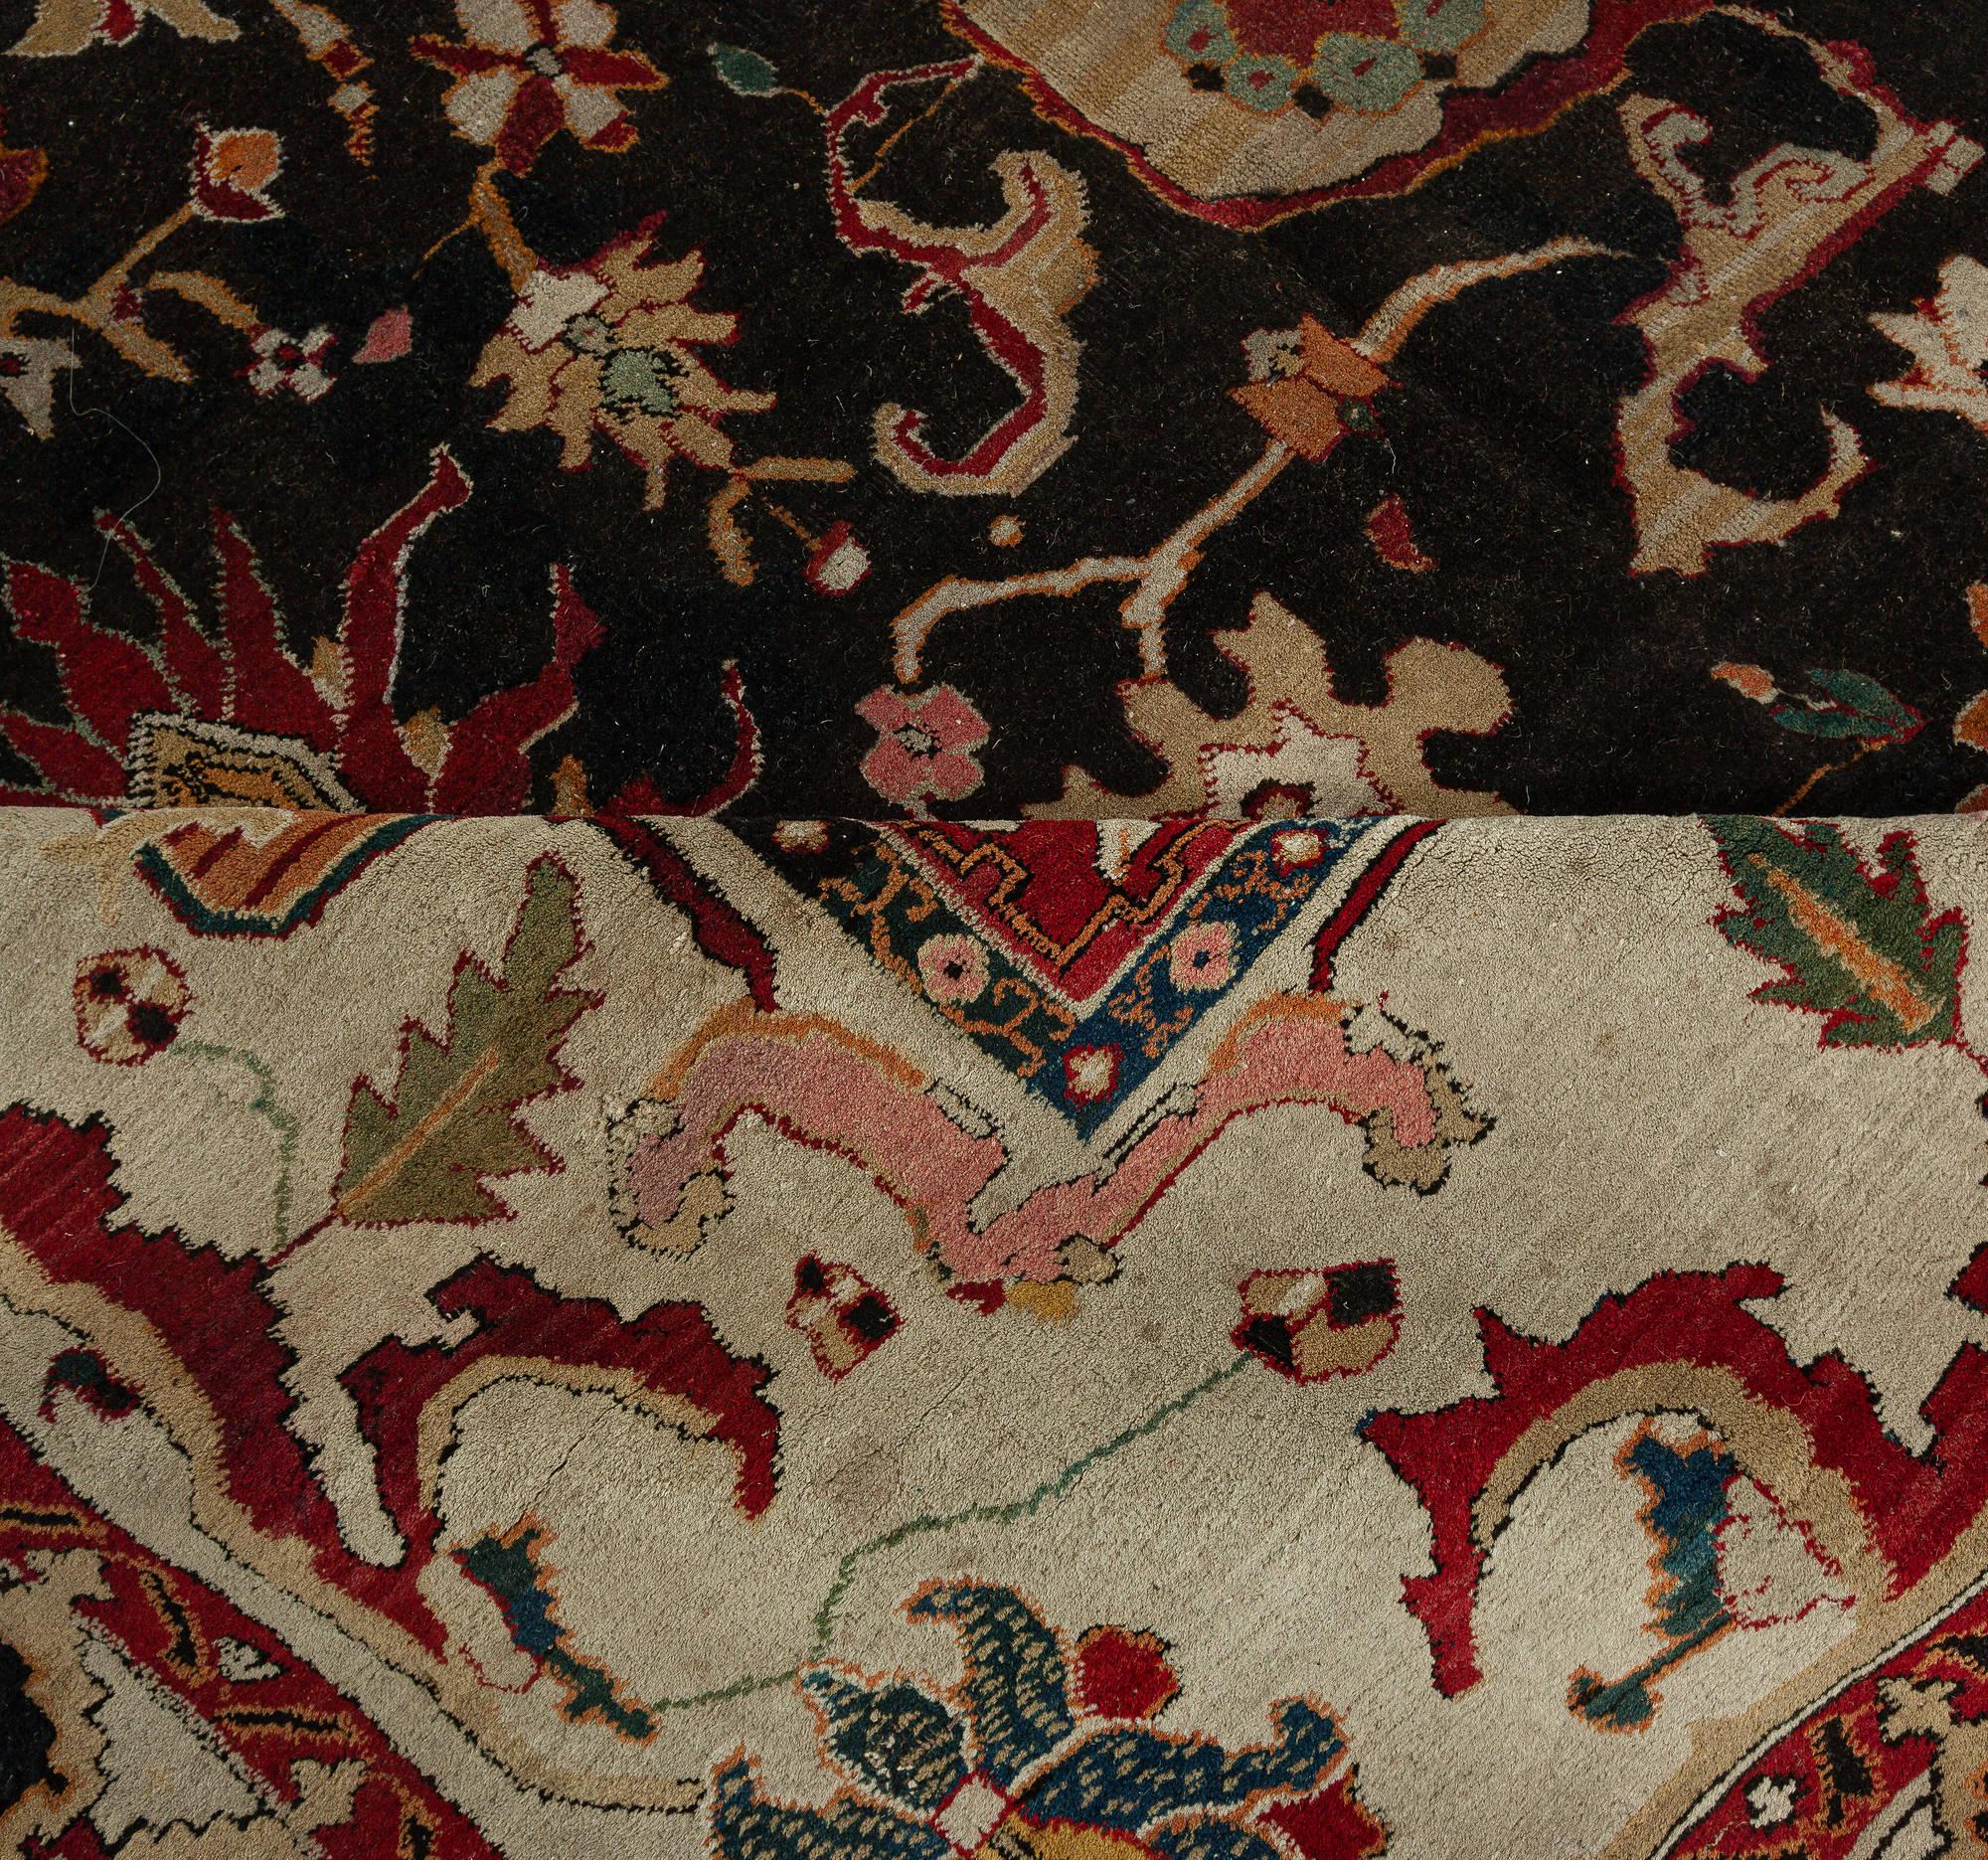 Antique Indian Agra botanic handmade wool rug
Size: 13'6